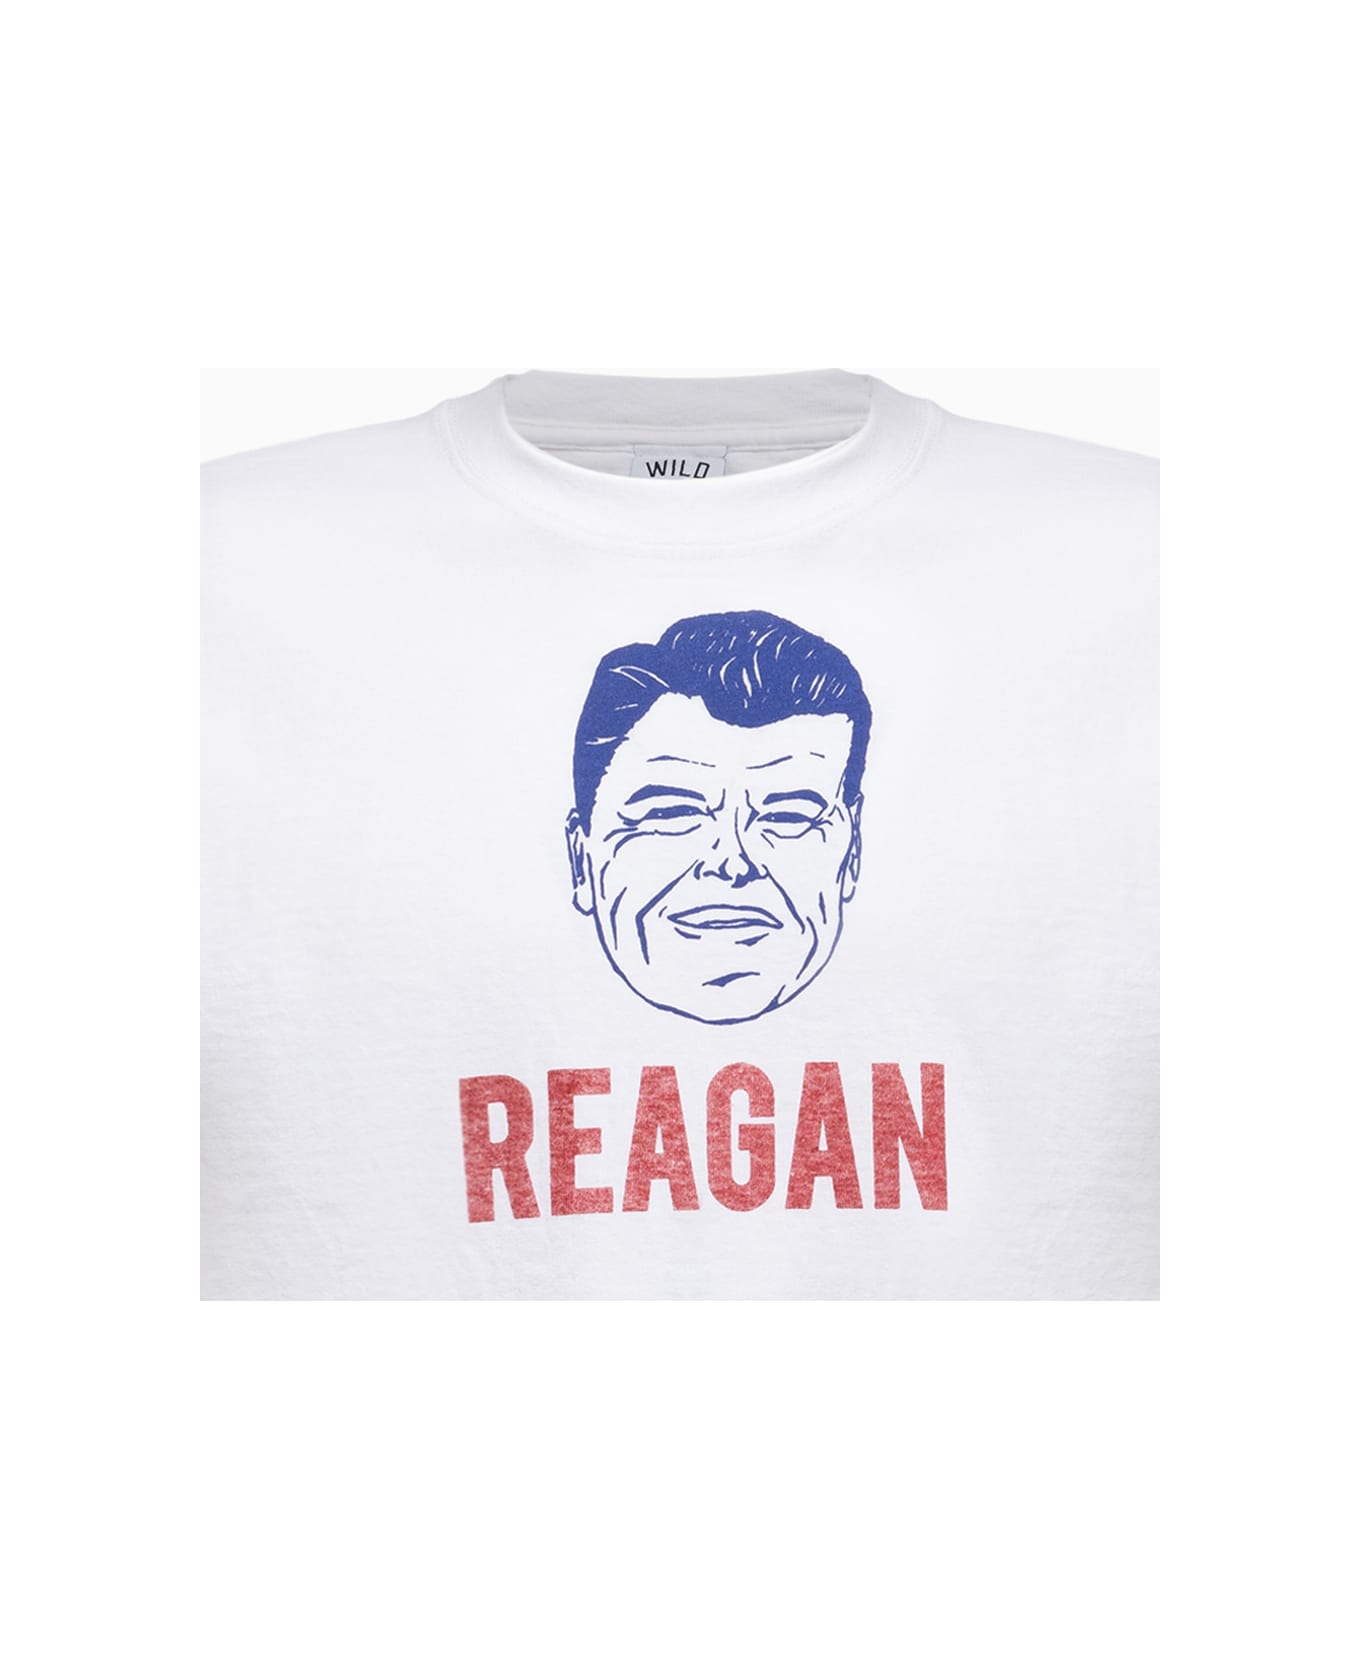 Wild Donkey s Reagan T-shirt - WD018